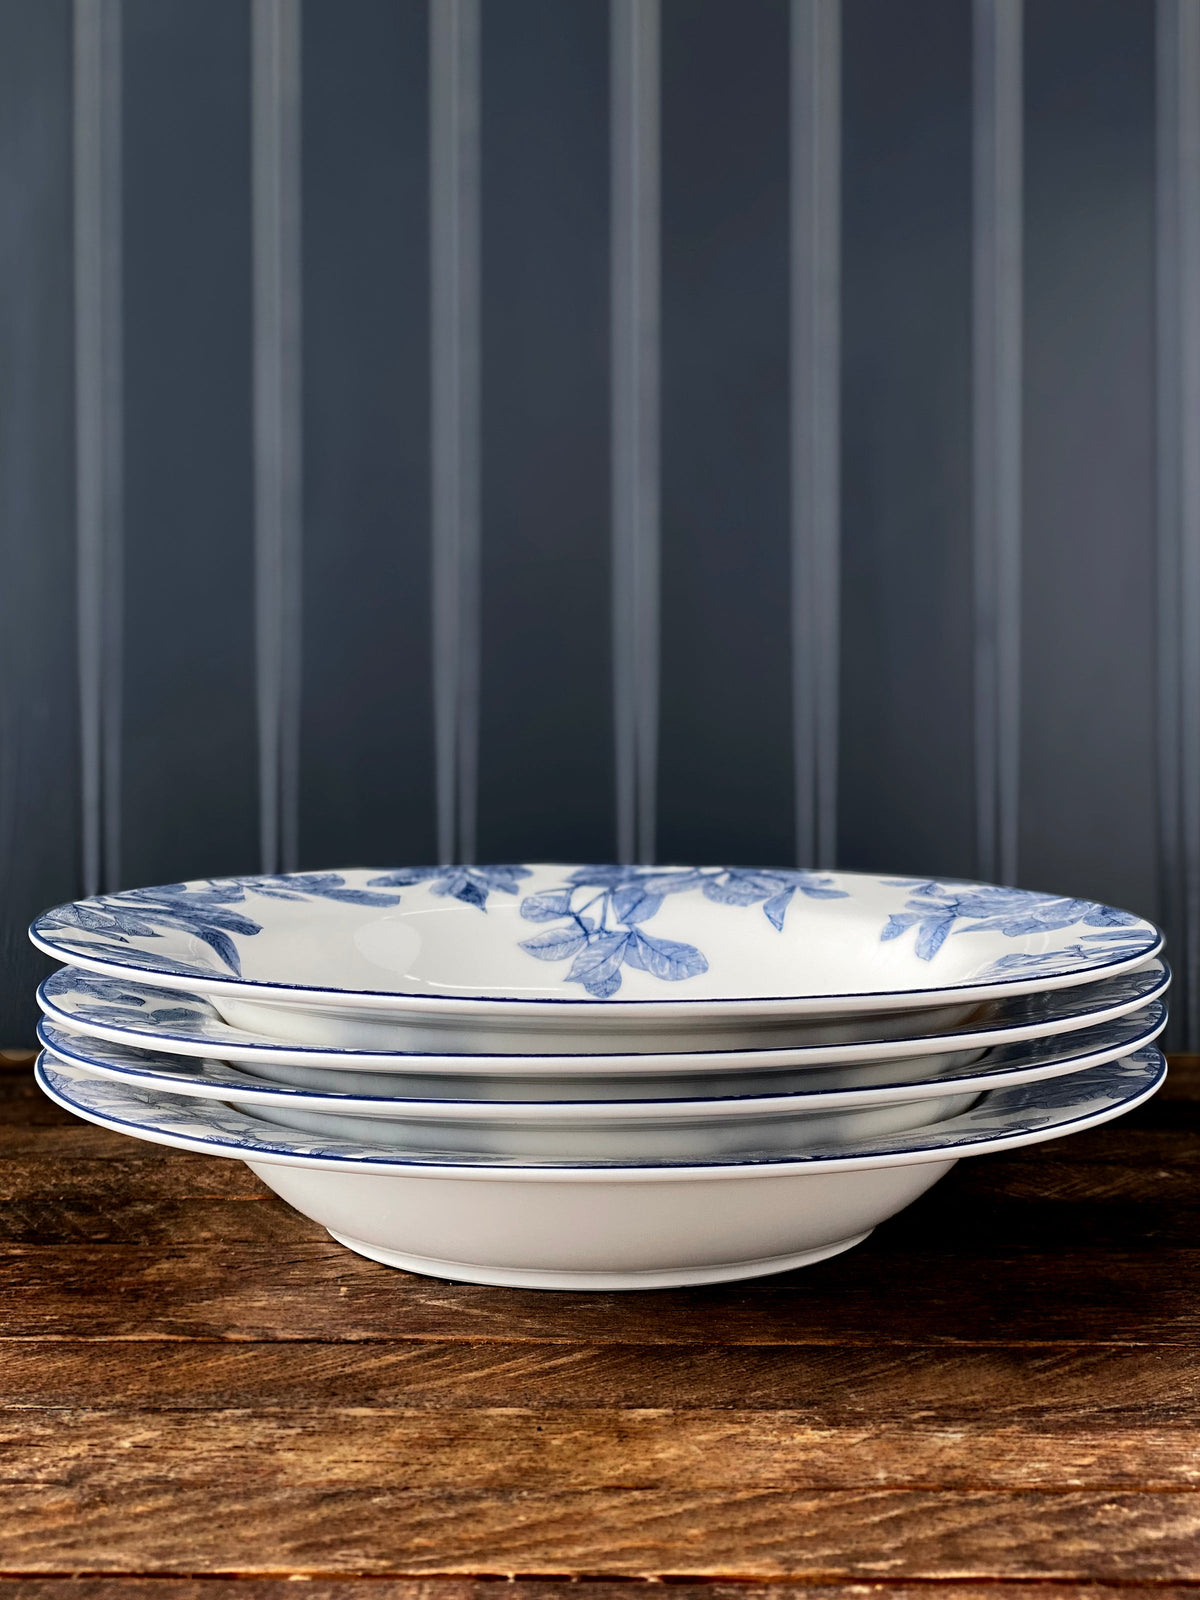 A set of Caskata Artisanal Home Blue Arbor Soup Bowls, including rimmed soup bowls, displayed on a wooden table.